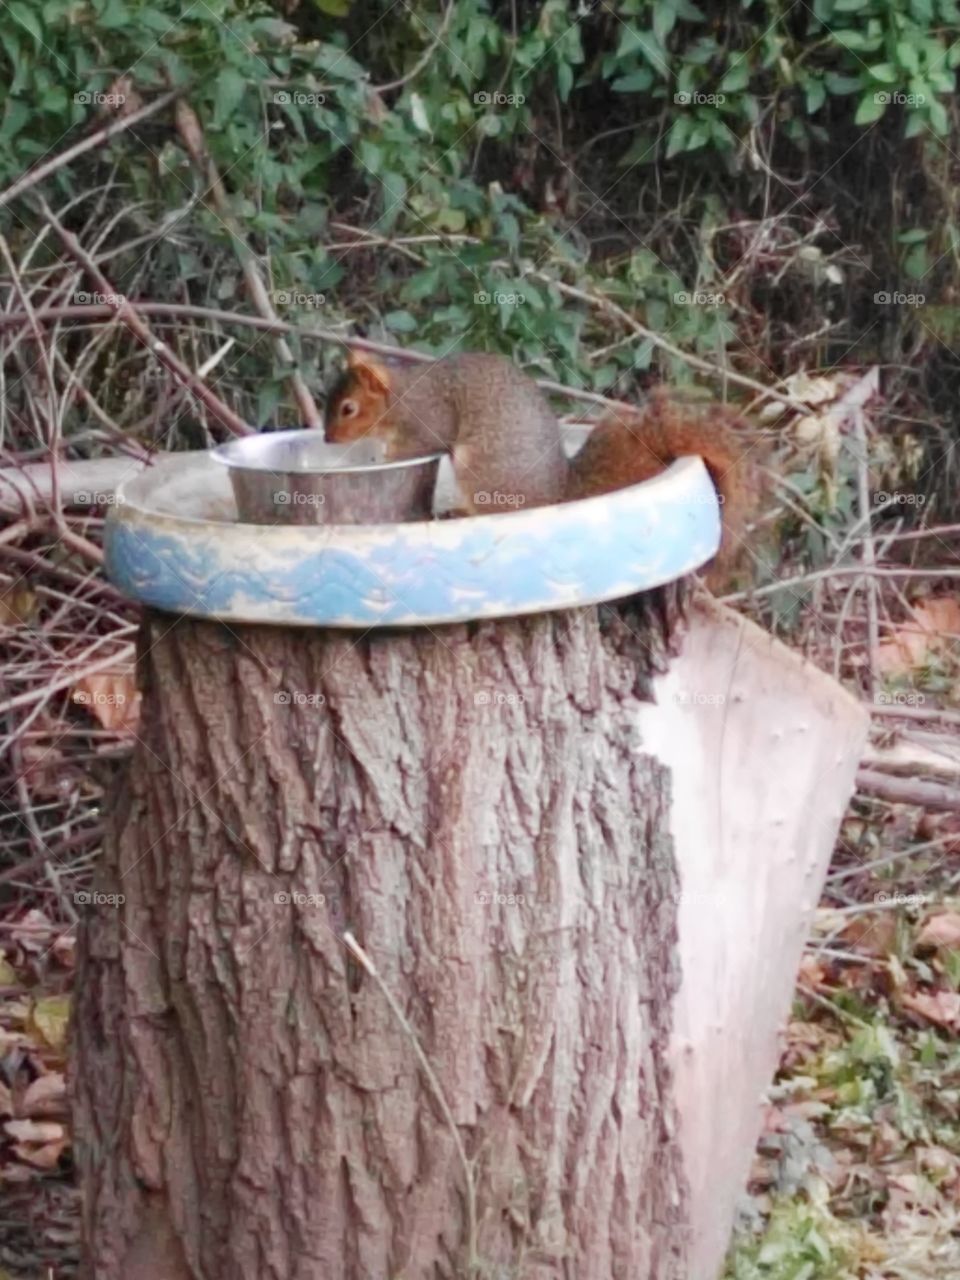 Squirrel breakfast